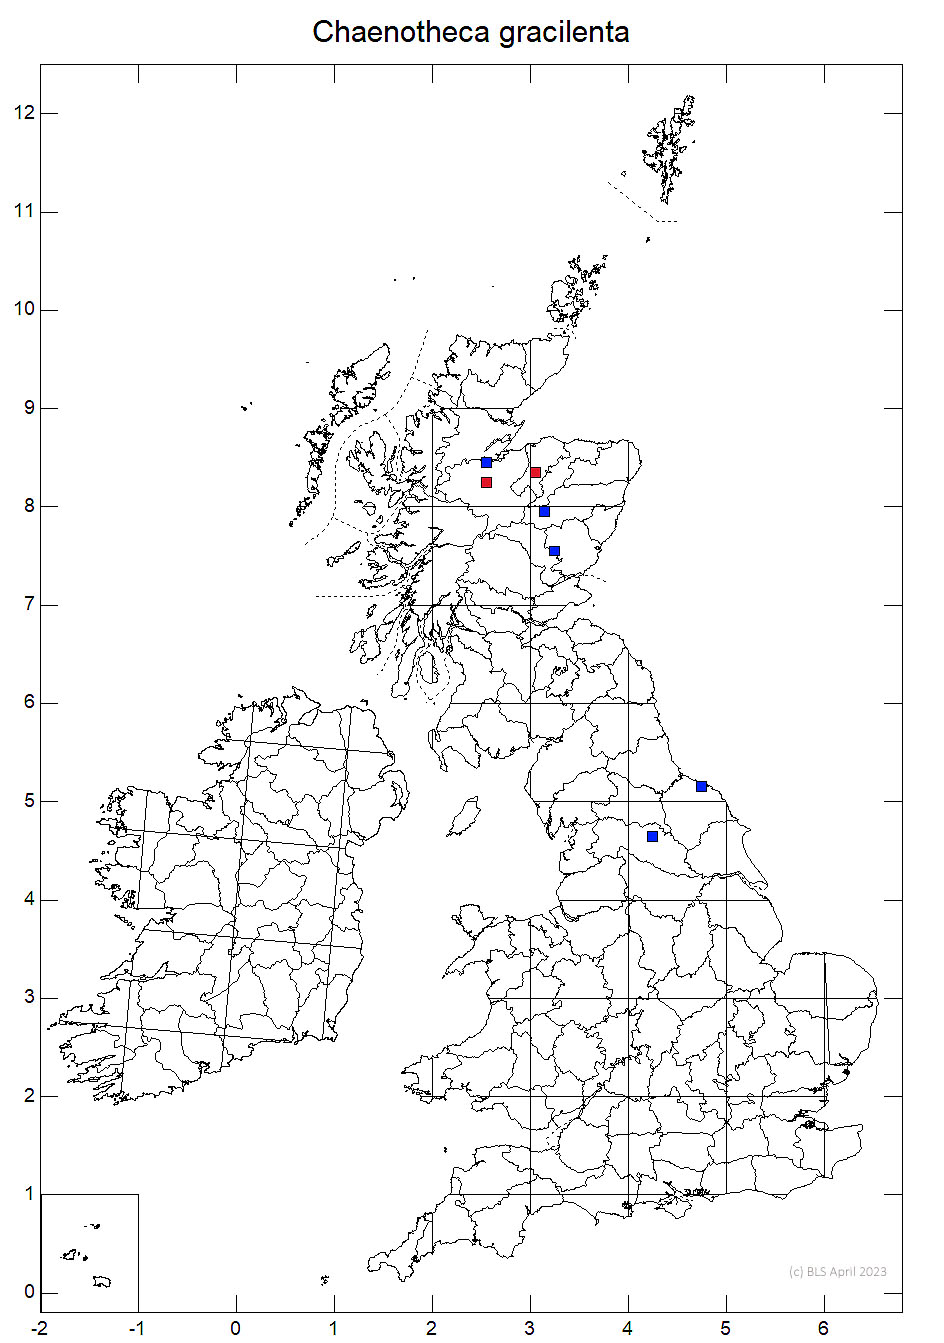 Chaenotheca gracilenta 10km sq distribution map